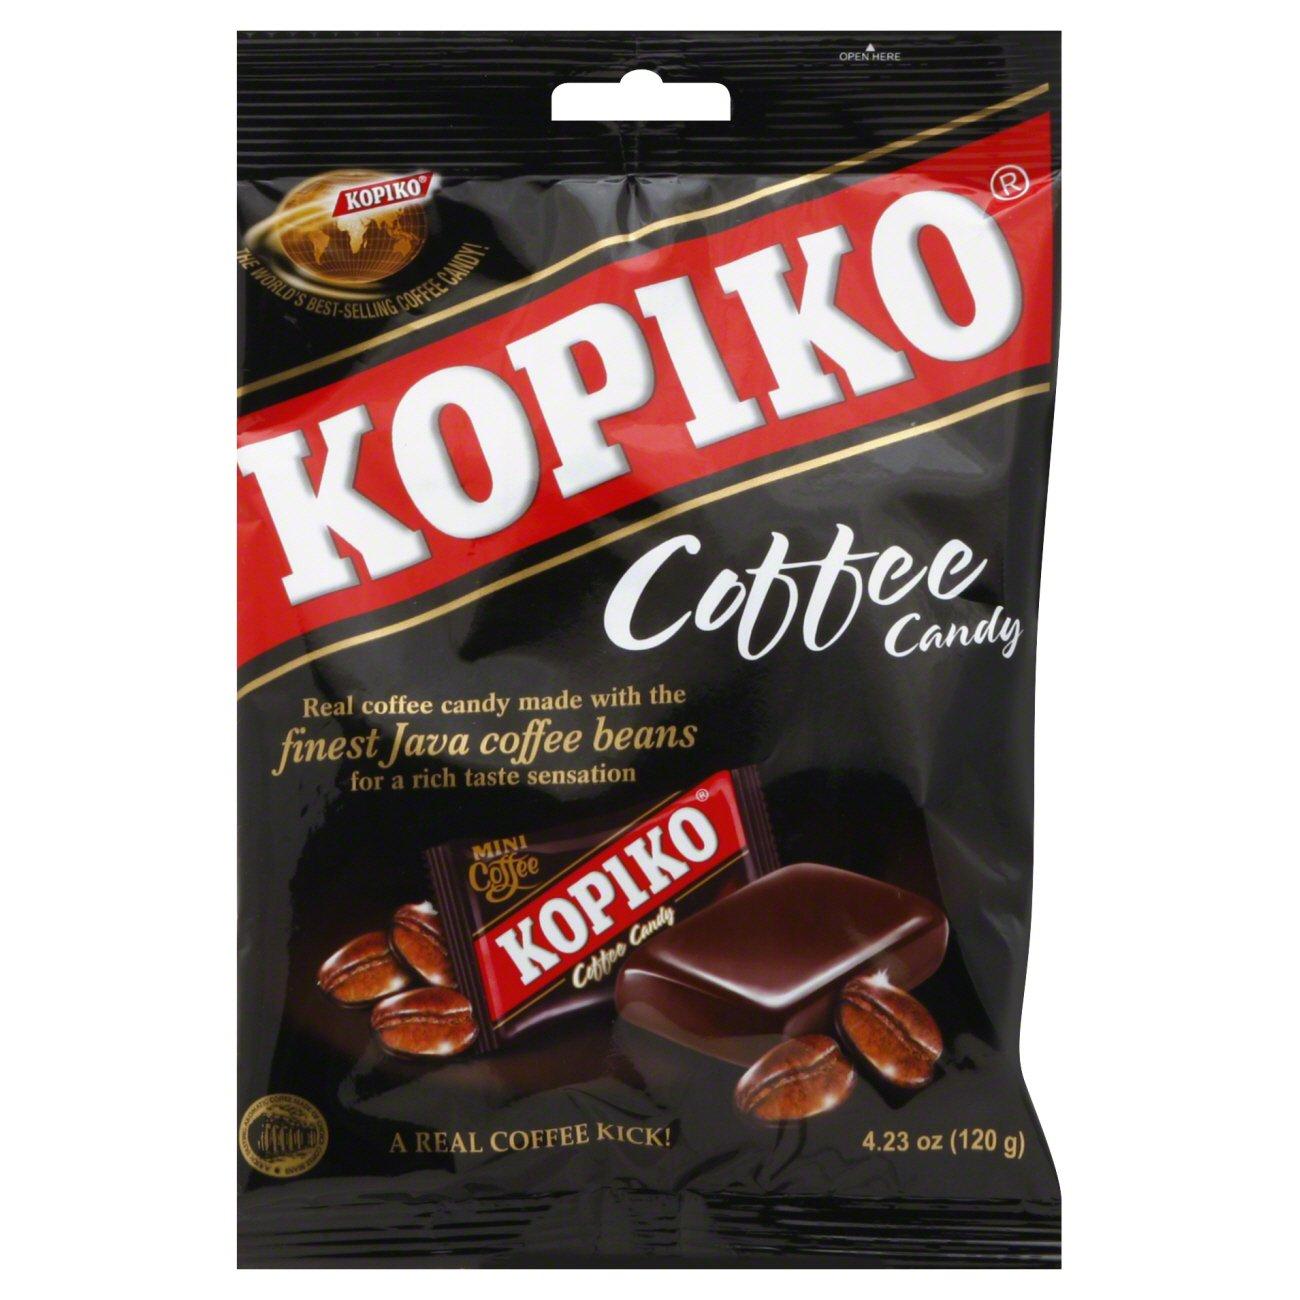 Coffee candy производитель. Кофе Кэнди. Kopiko шоколад. Tasty Coffee Кэнди. Kopico Coffee Candy.